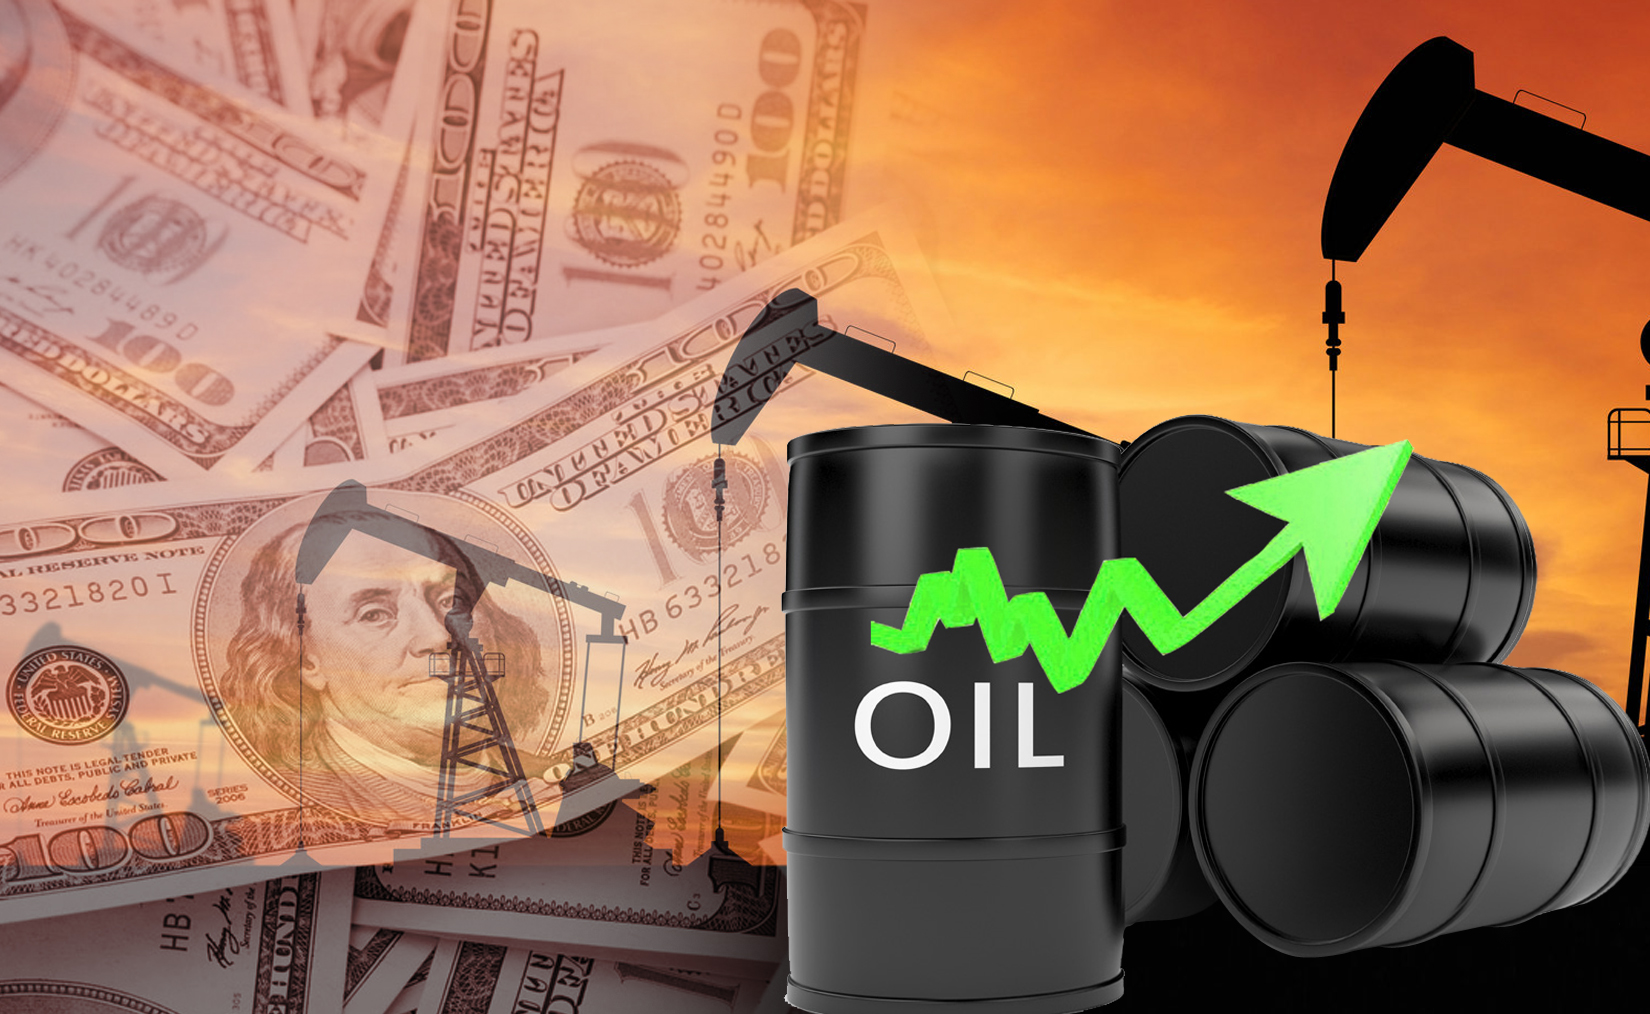 Kuwaiti crude oil price up 4 cents to USD 39.14 pb                                                                                                                                                                                                        